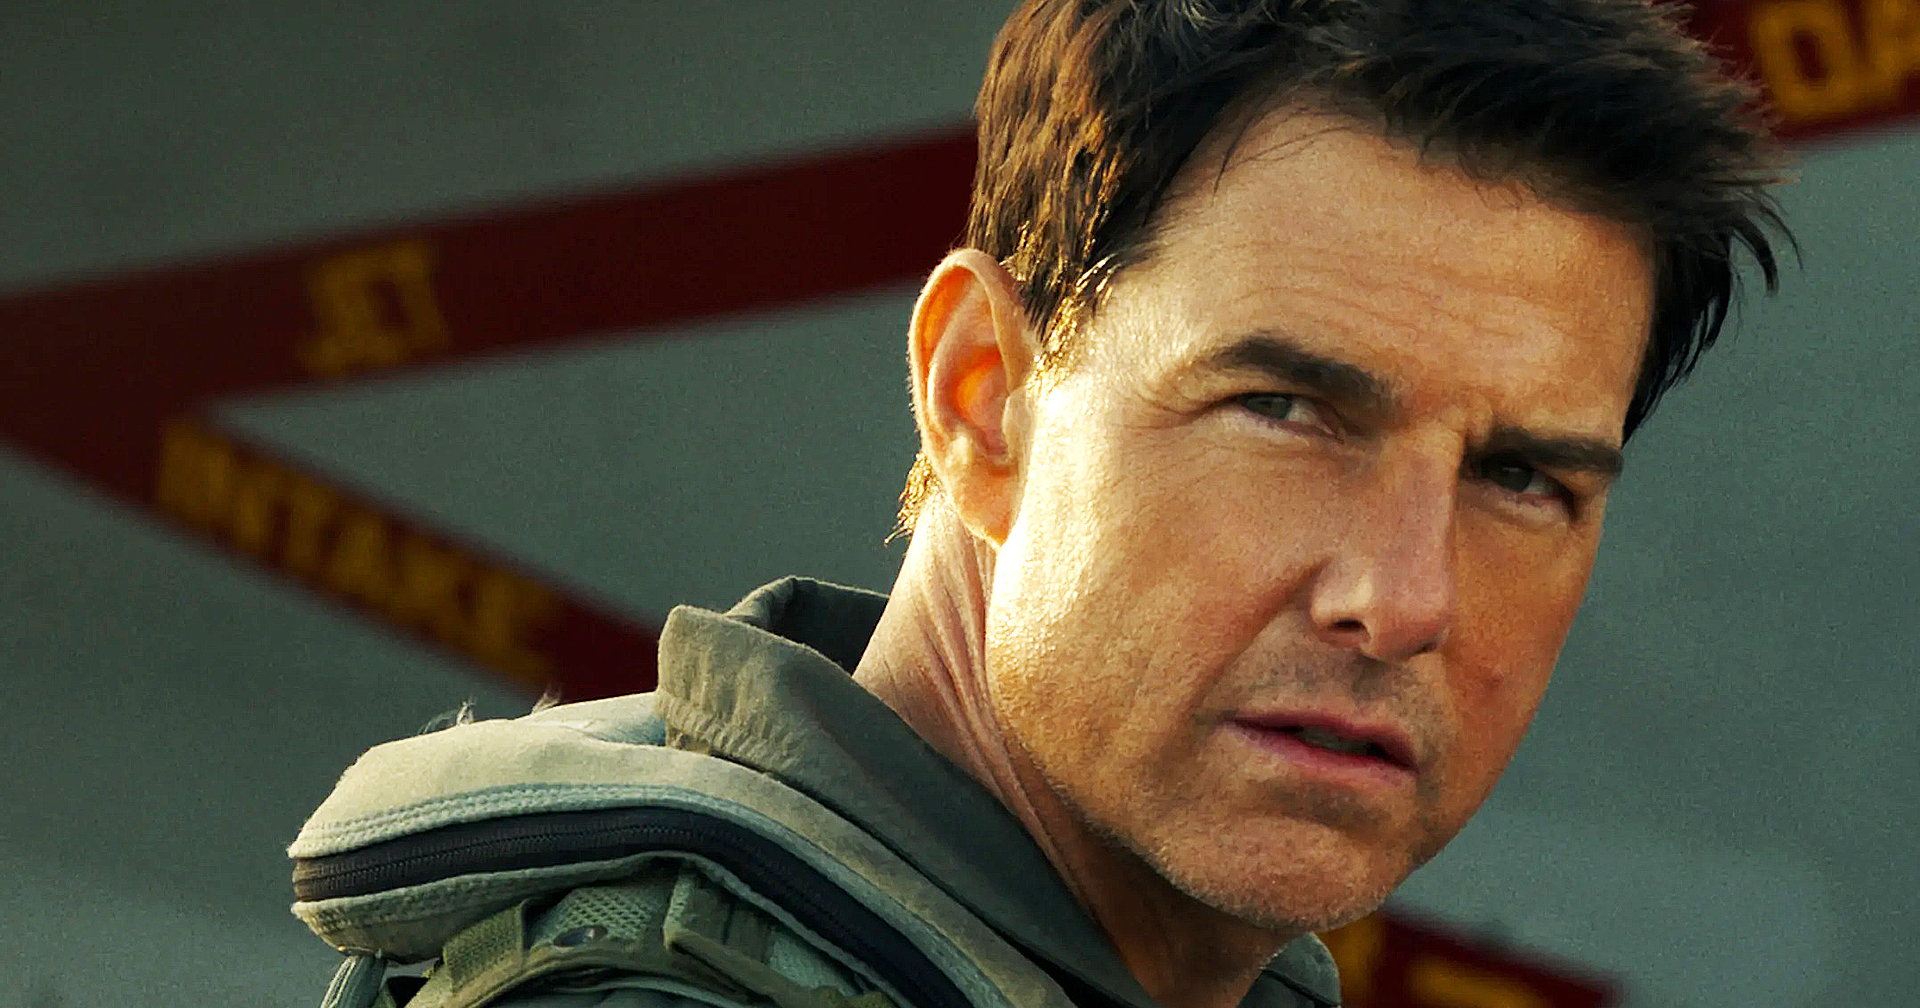 ‘Top Gun: Maverick’ ได้รางวัลรีวิวยอดเยี่ยมประจำปี 2022 จาก Rotten Tomatoes